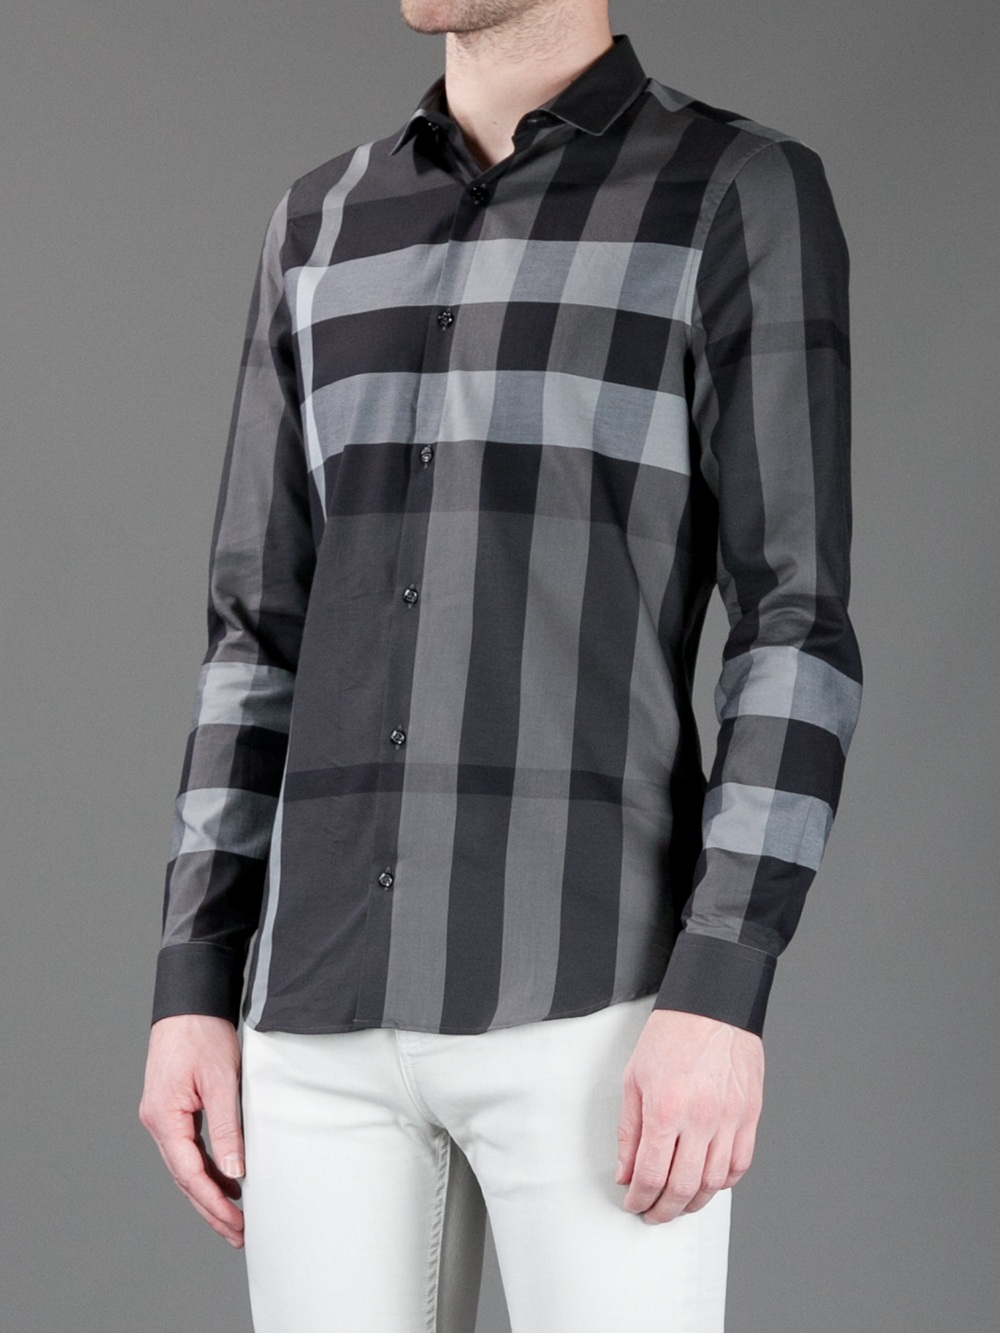 Burberry Pembury Check Shirt in Grey (Grey) for Men - Lyst